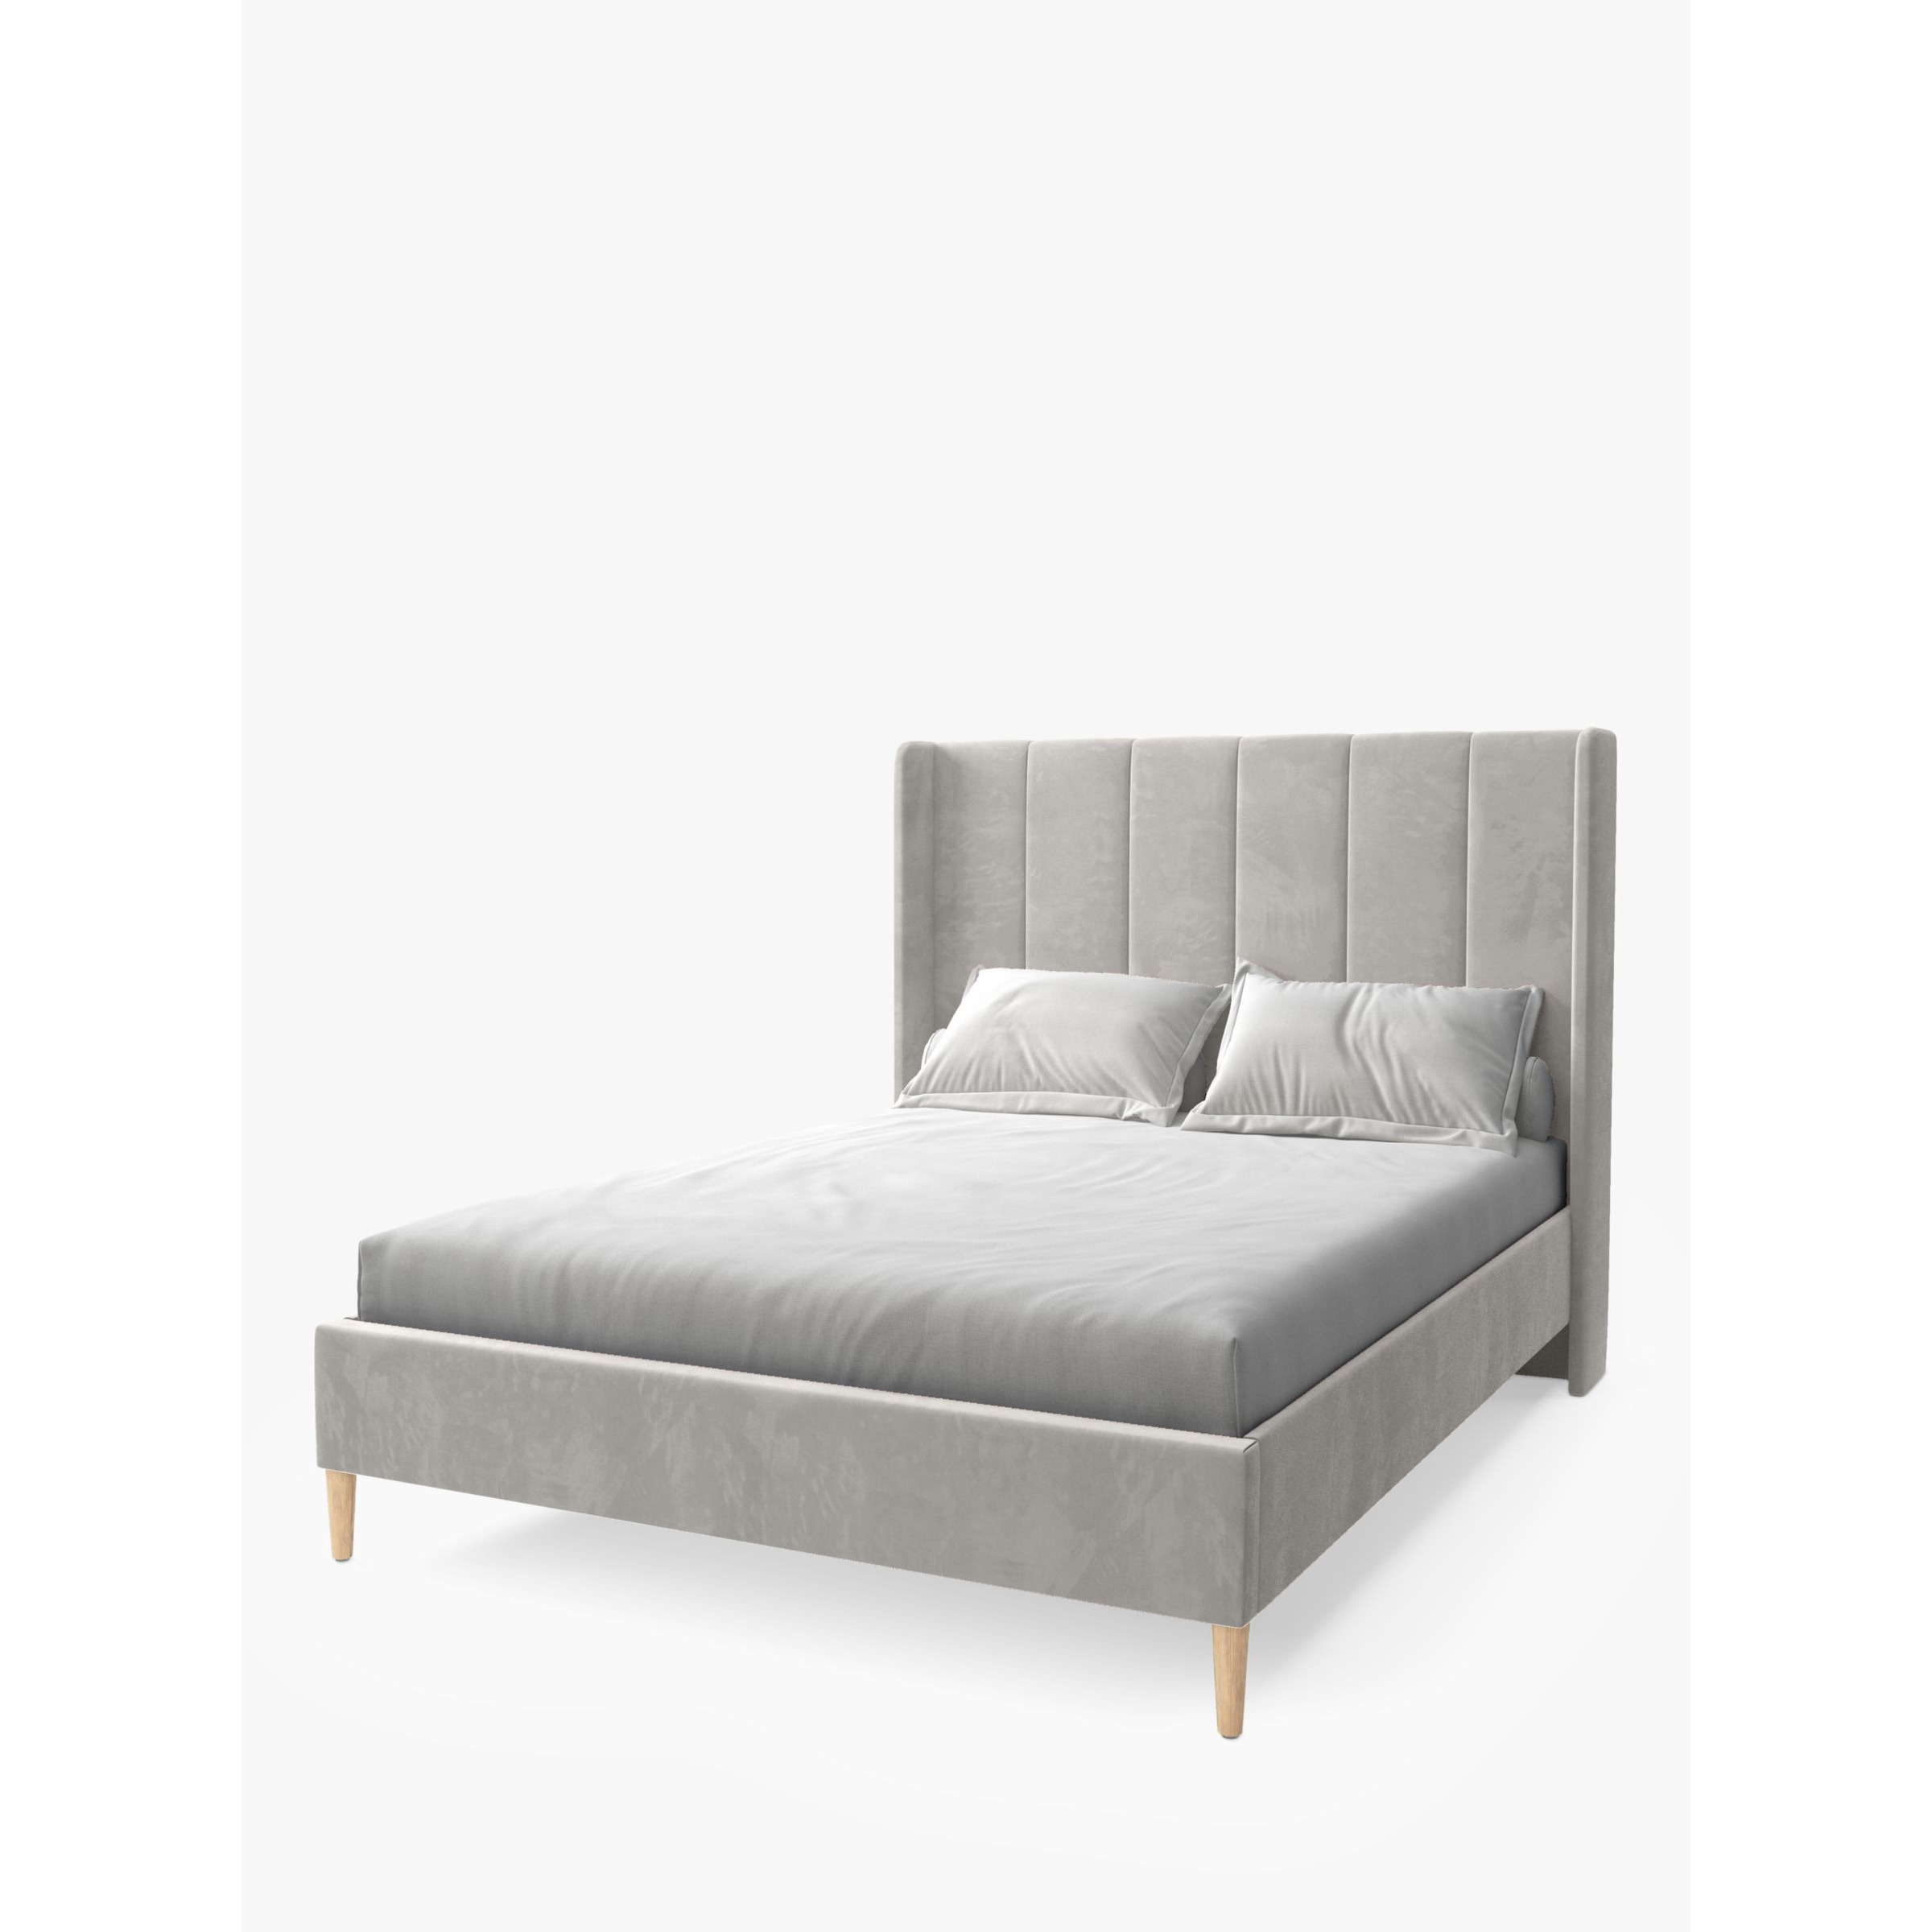 Koti Home Adur Upholstered Bed Frame, Double - image 1